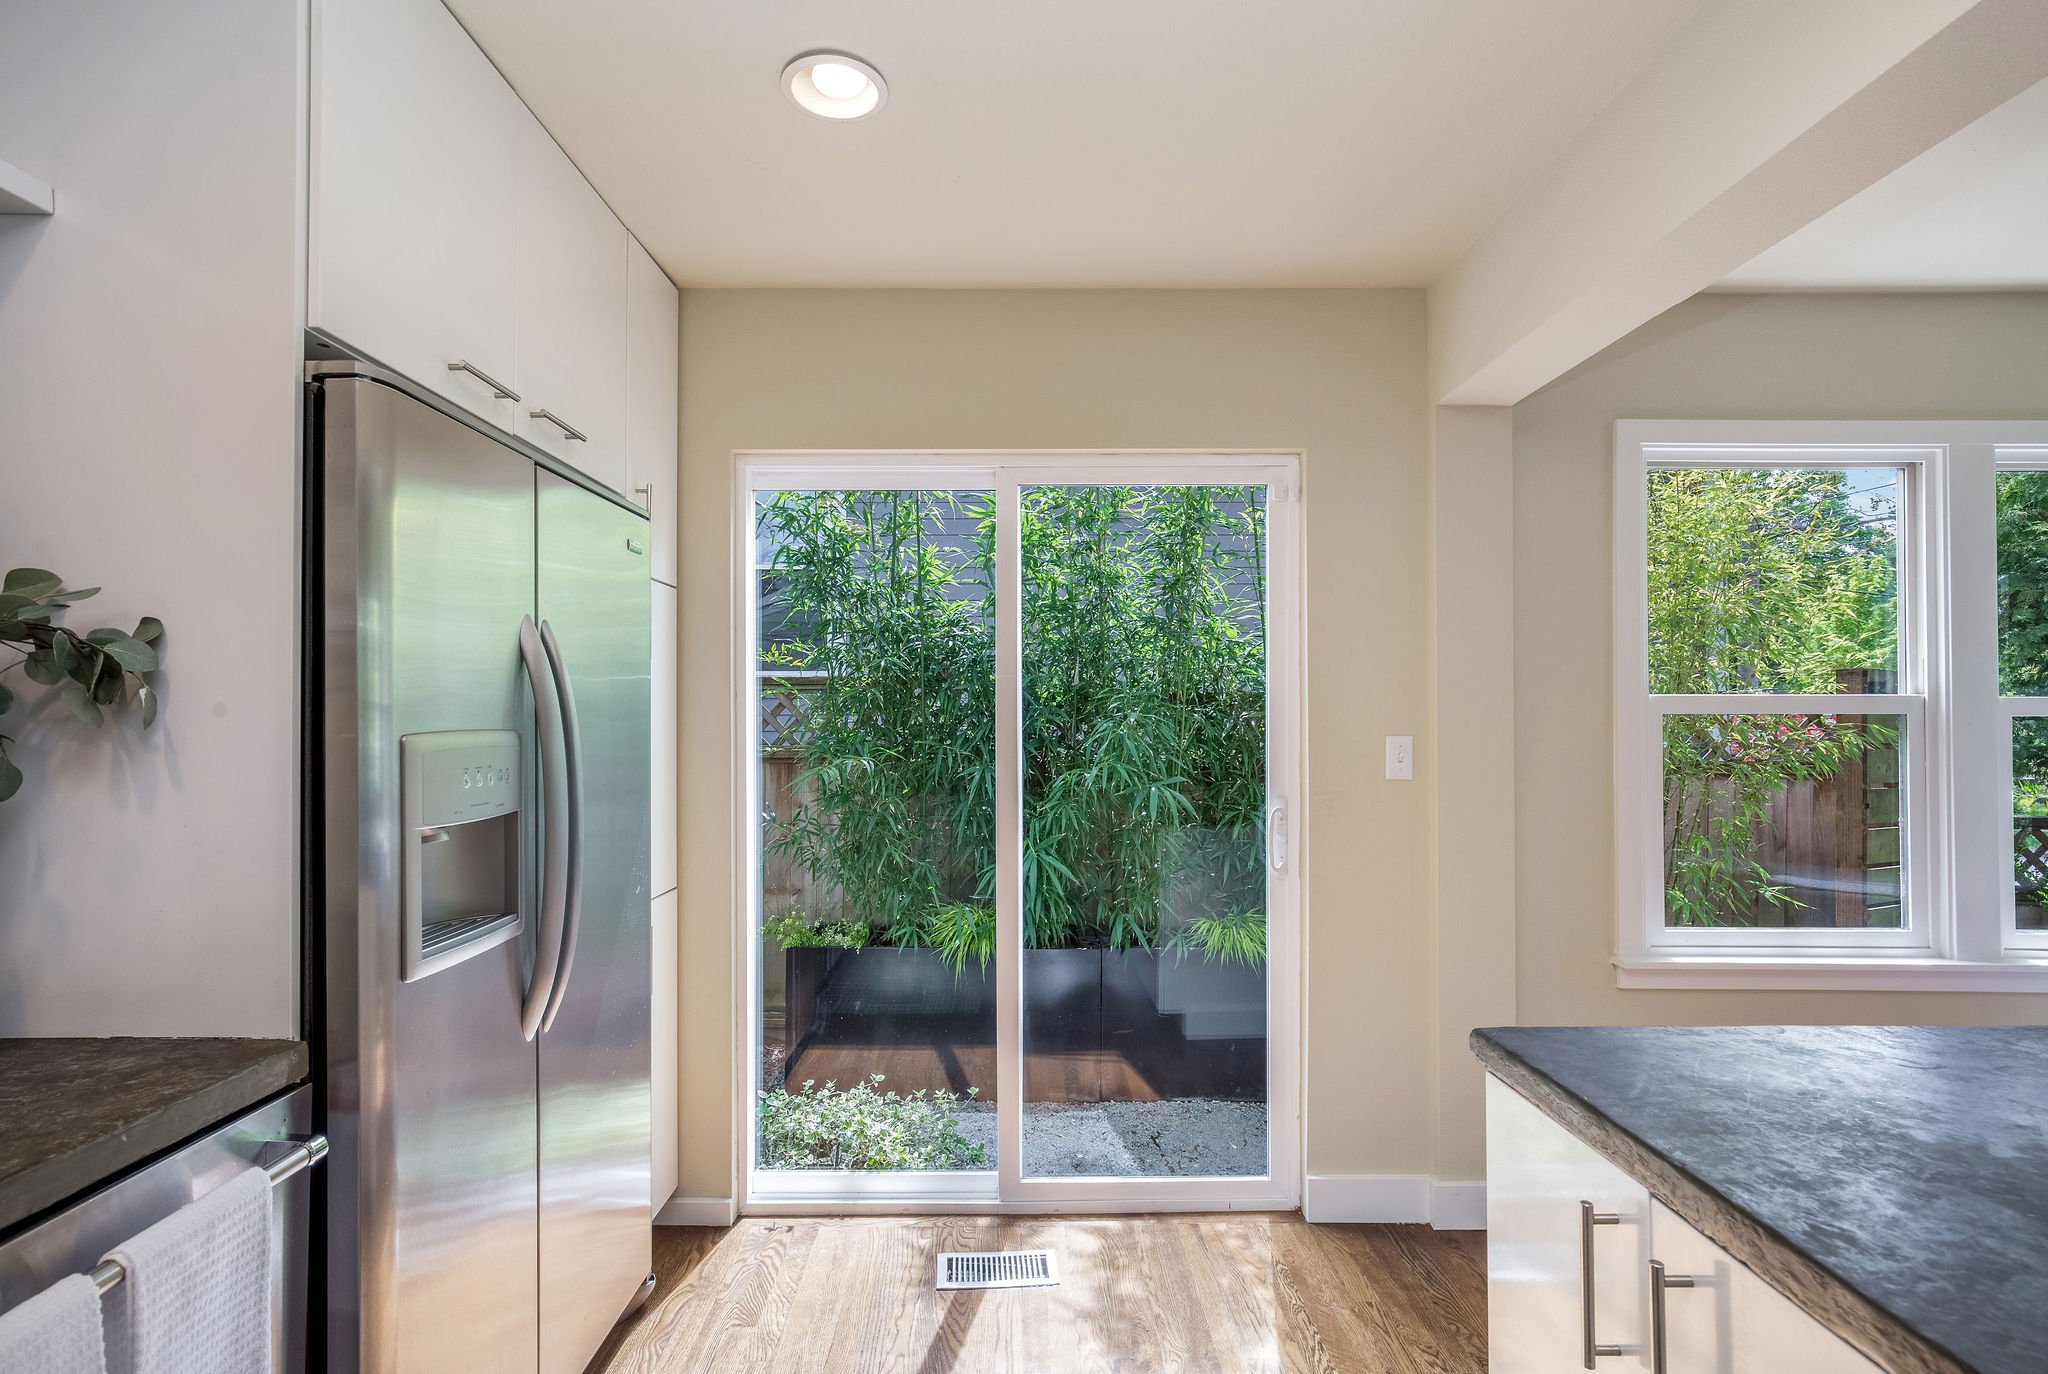  image description: interior kitchen with connected island, hardwoods, brown countertops and sliding glass door 